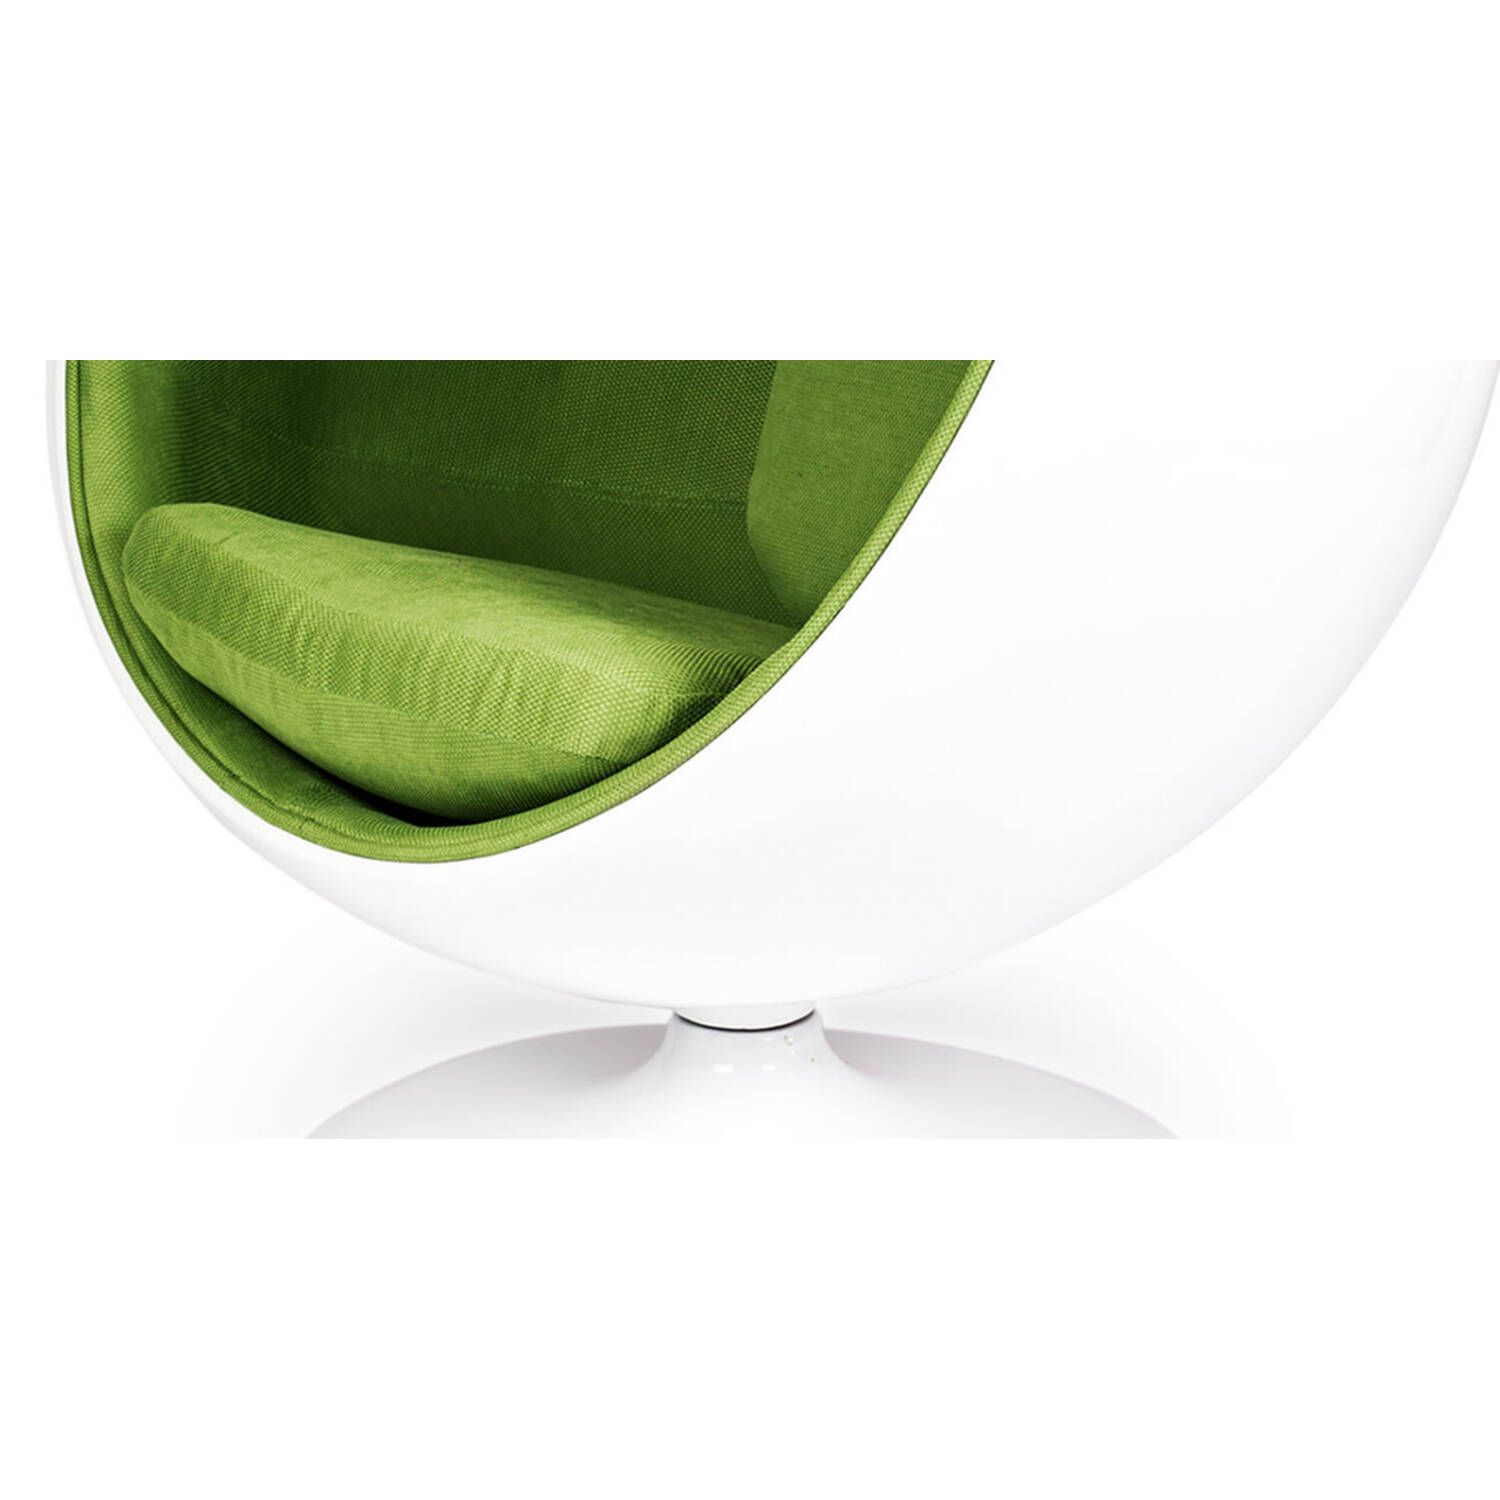 Кресло-шар Ball Chair бело-зеленое